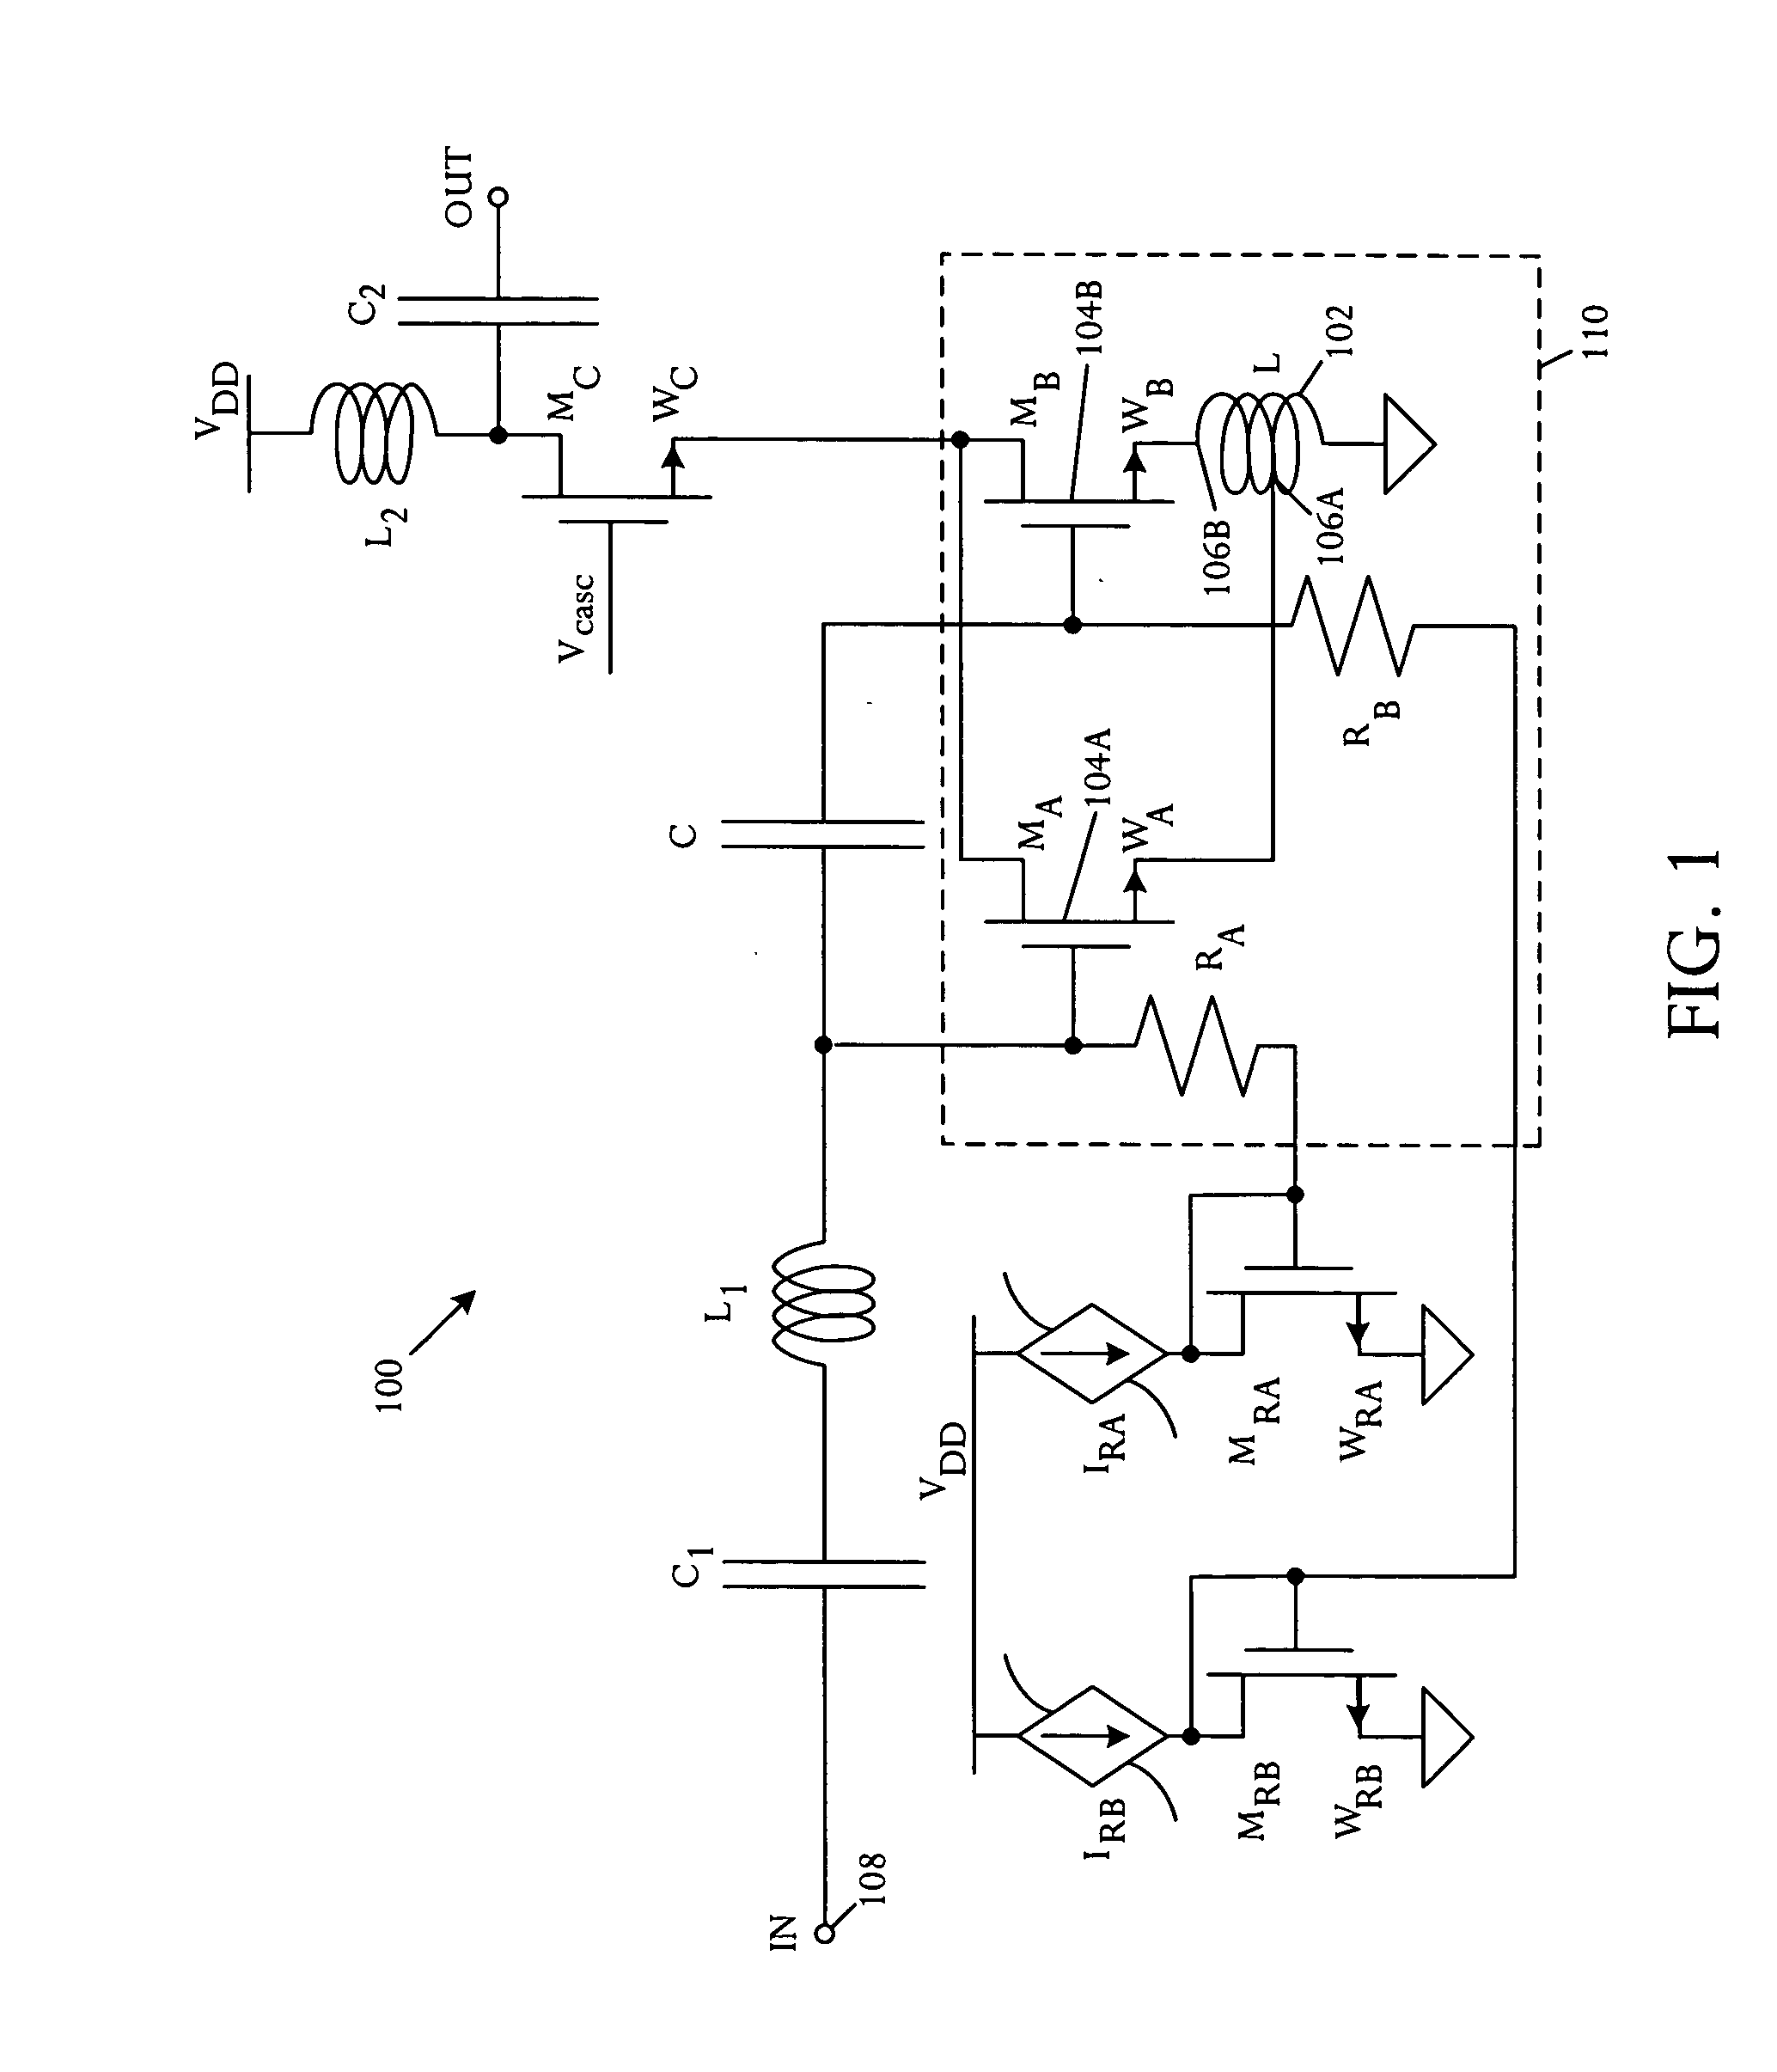 Field effect transistor amplifier with linearization